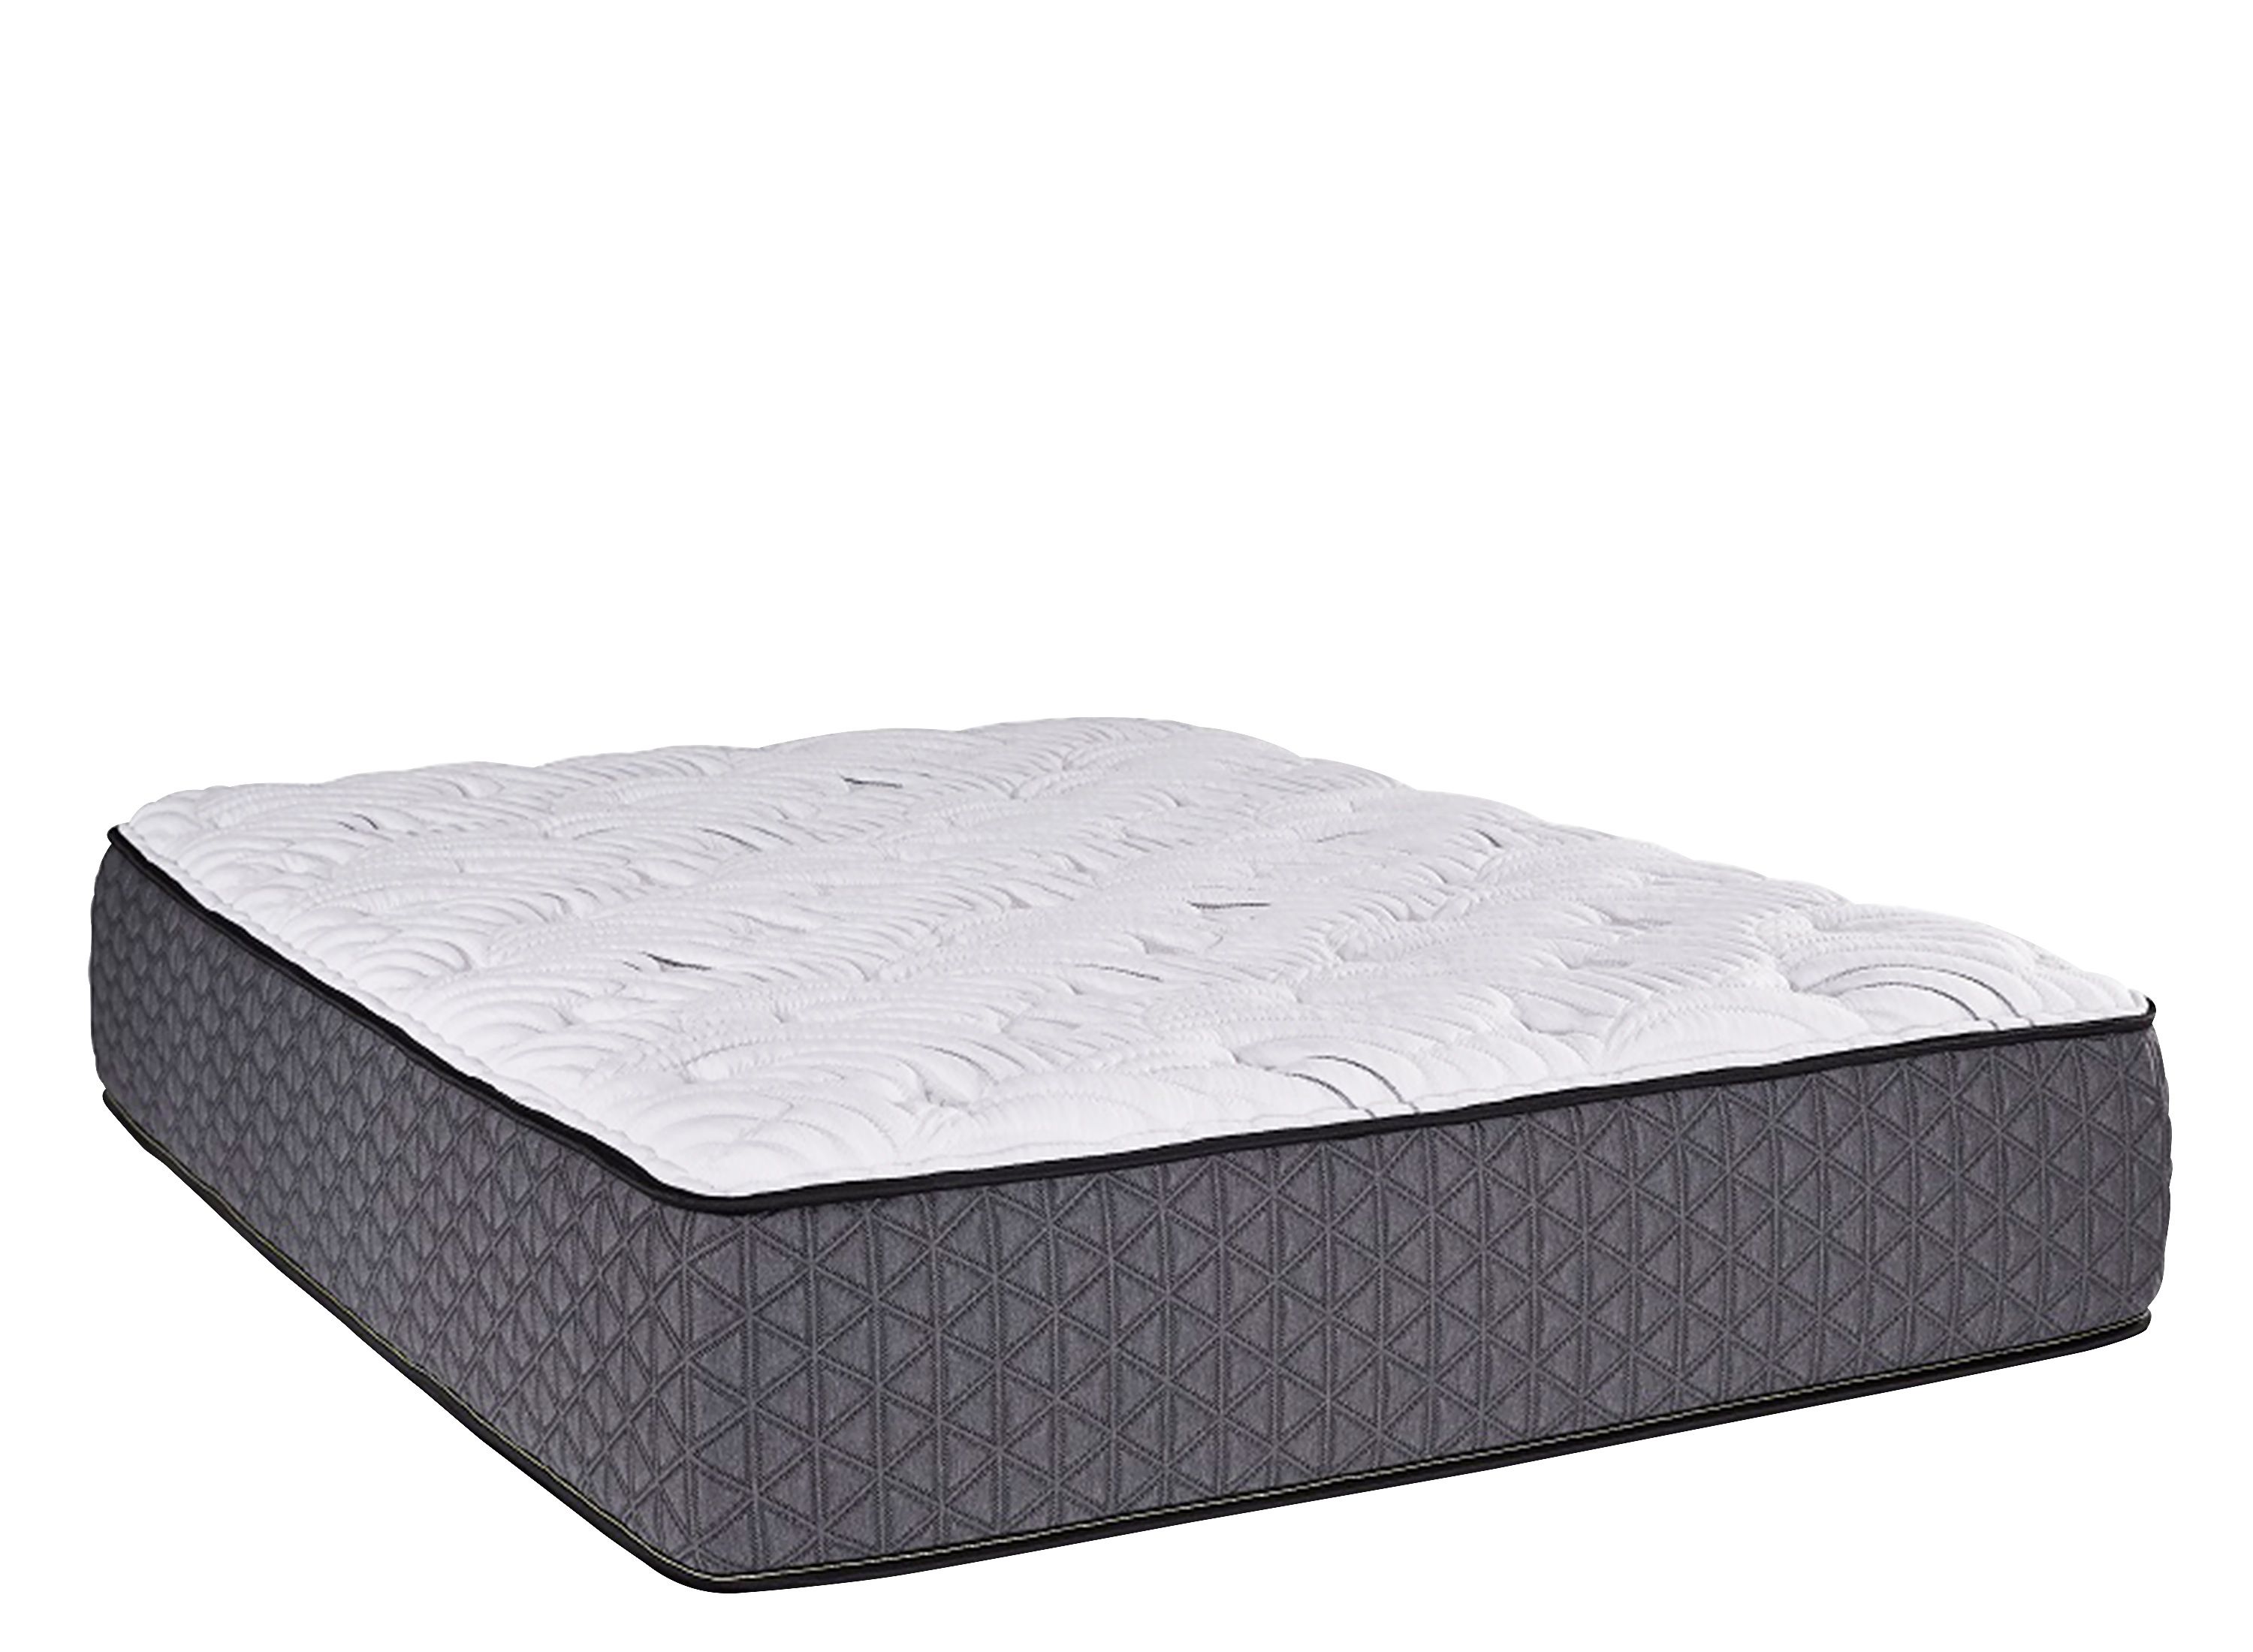 bellanest imperial euro top full mattress reviews